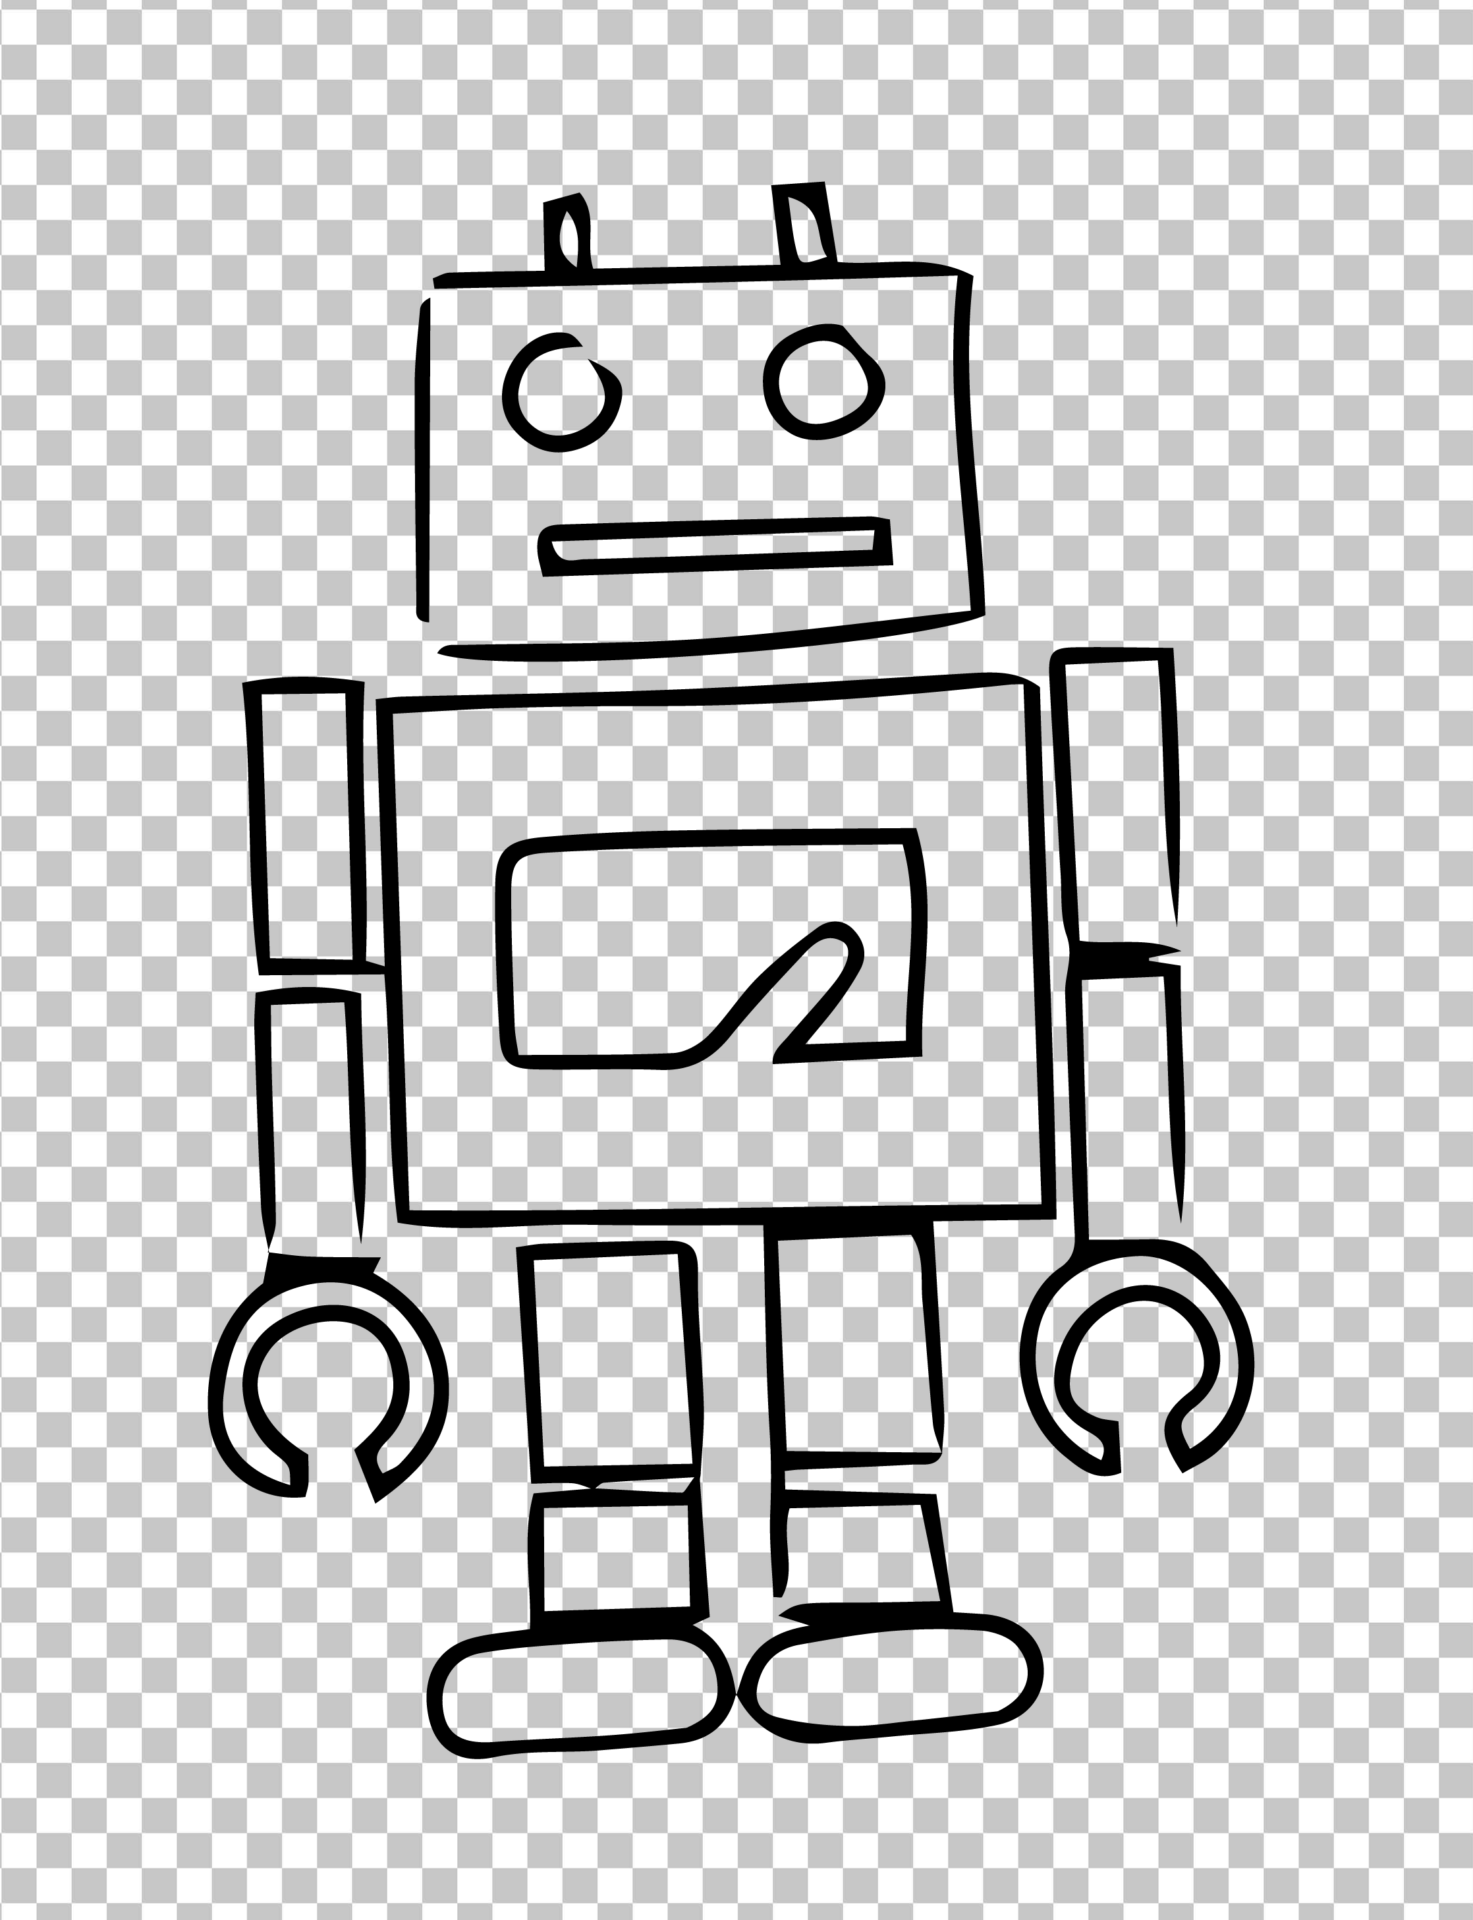 Robot Sketch PNG Image